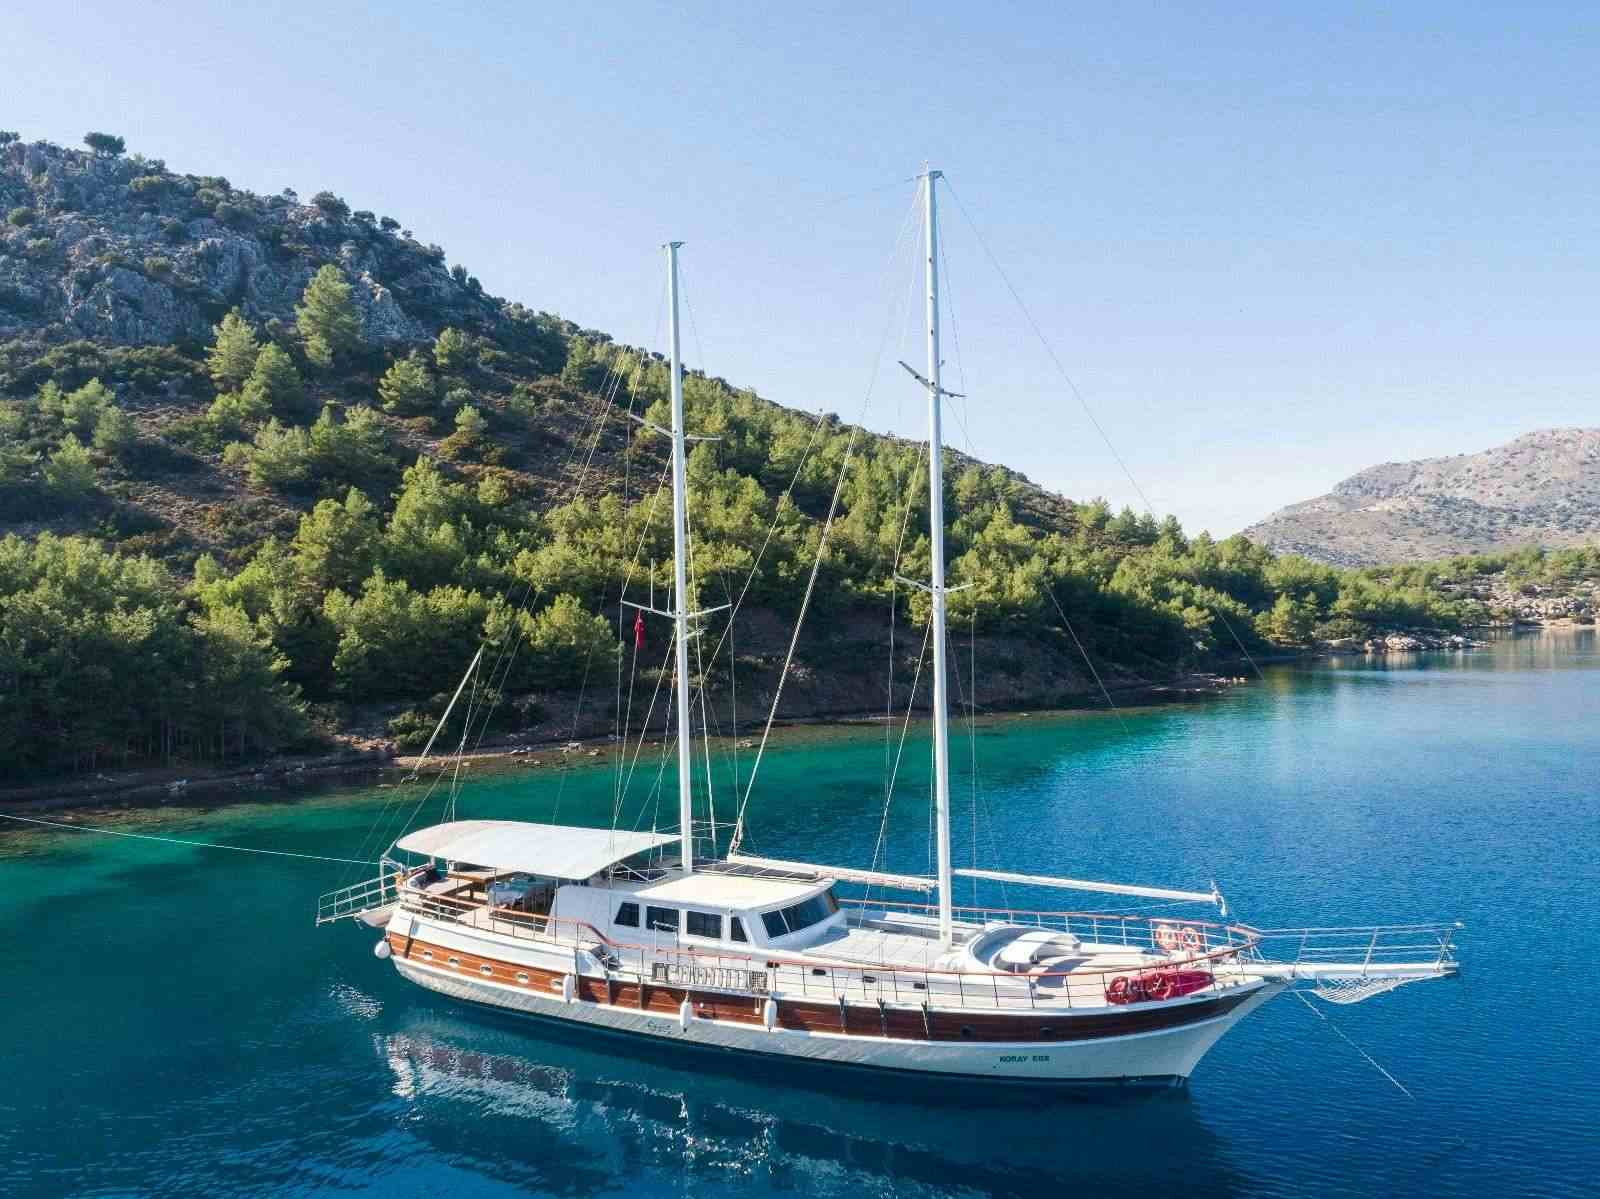 koray ege - Yacht Charter Lefkada & Boat hire in Greece & Turkey 1